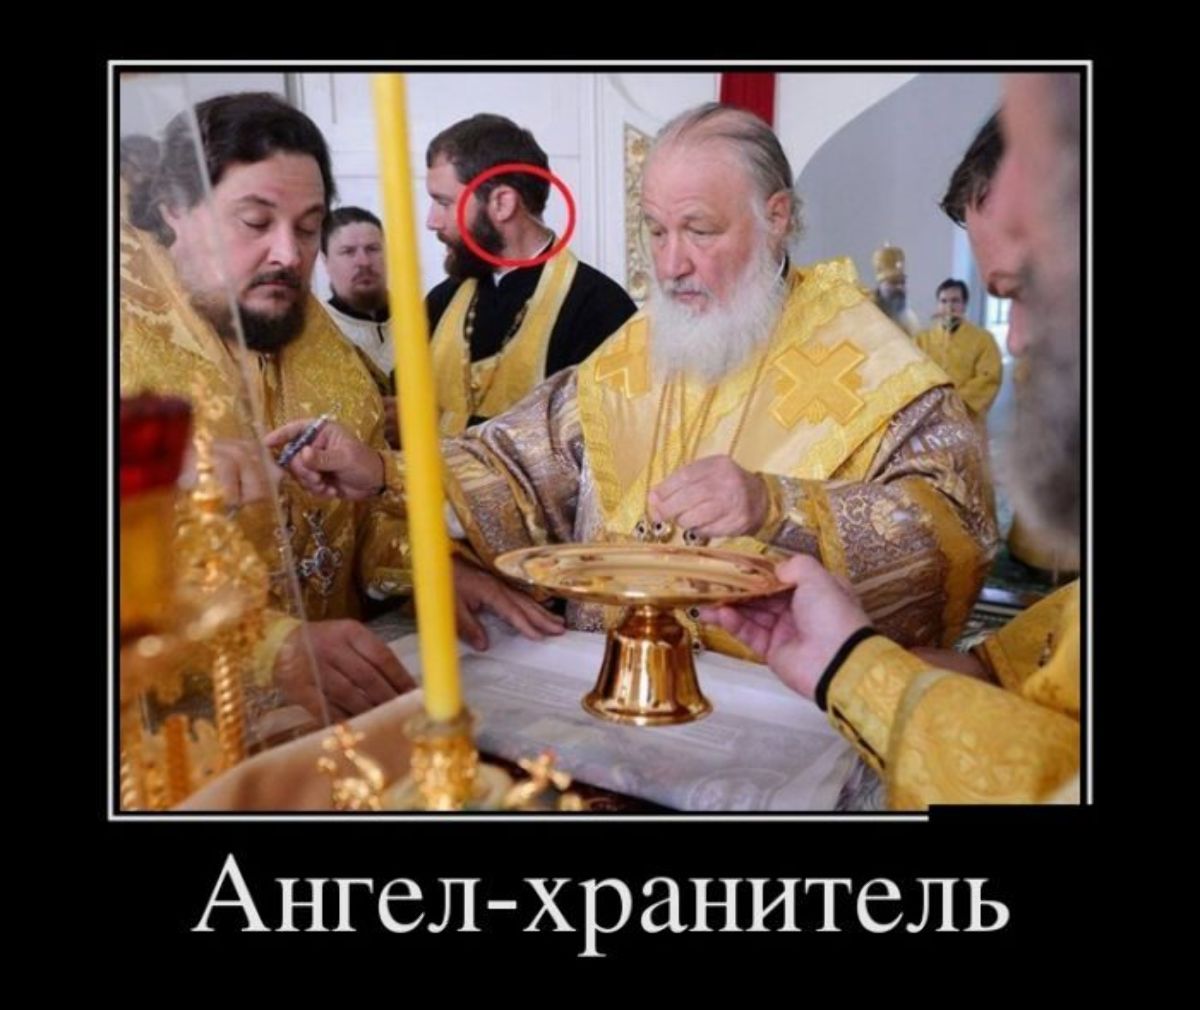 Мемы православные шутят